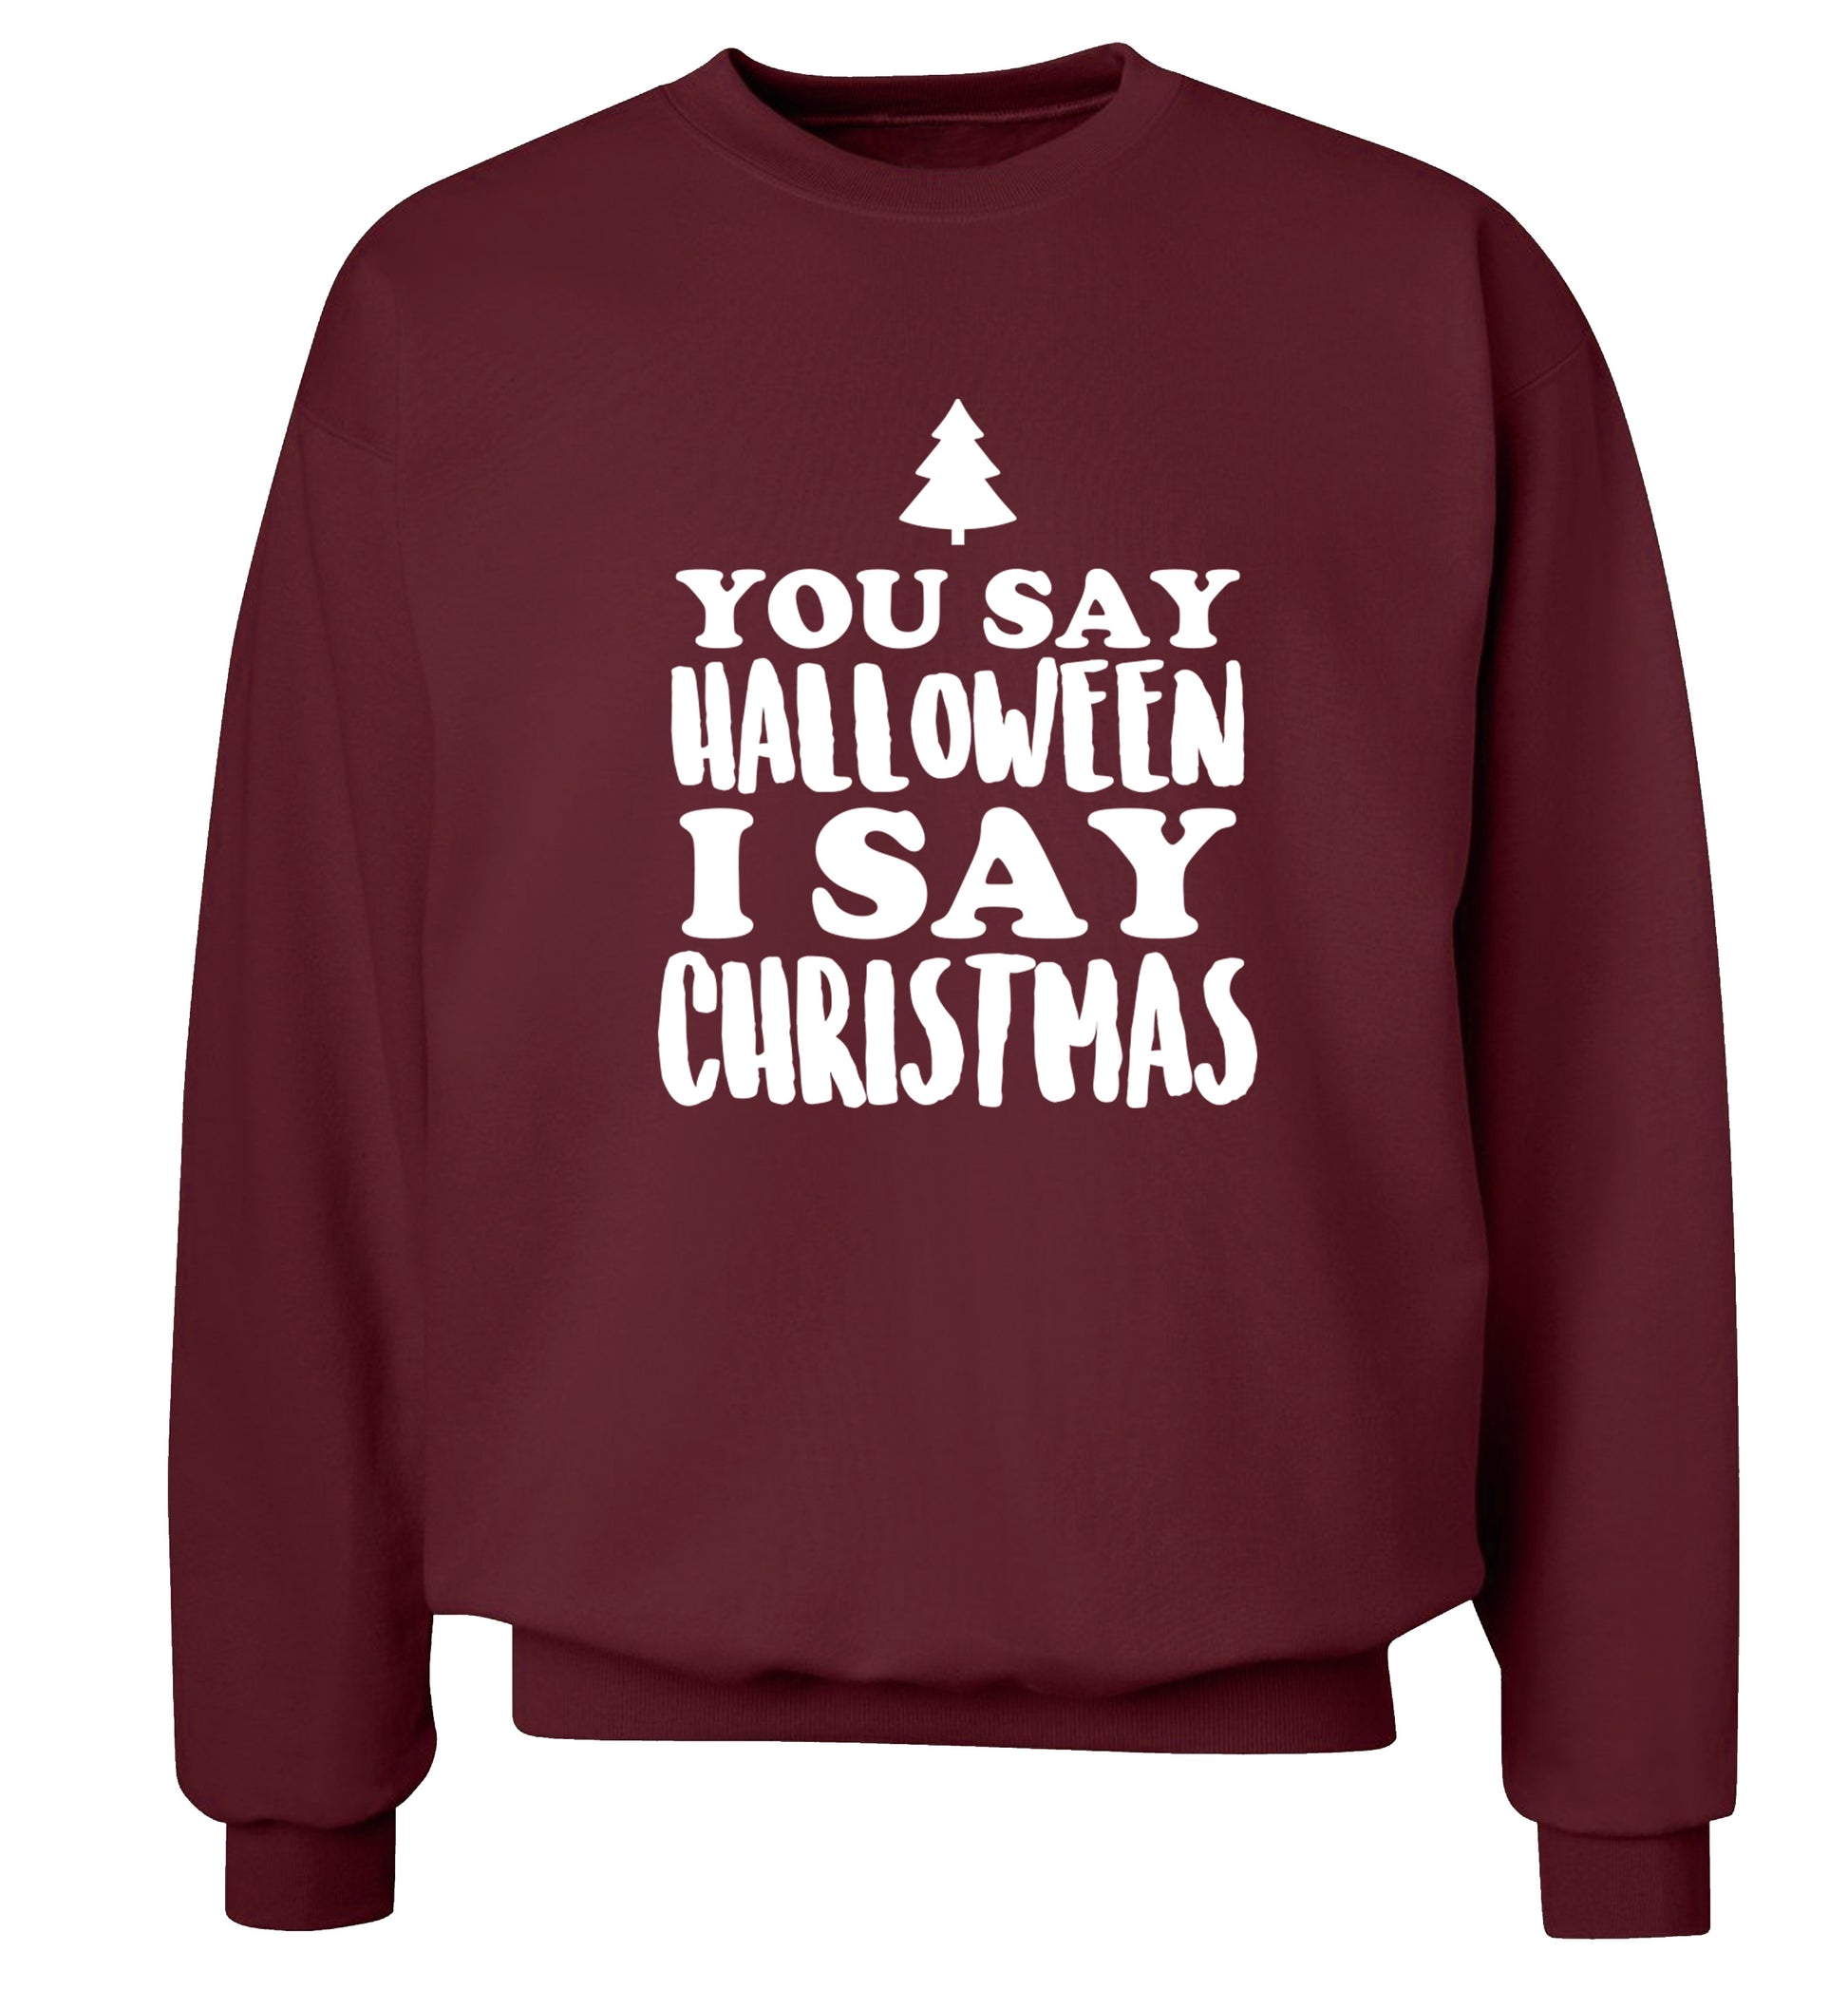 You say halloween I say christmas! Adult's unisex maroon Sweater 2XL